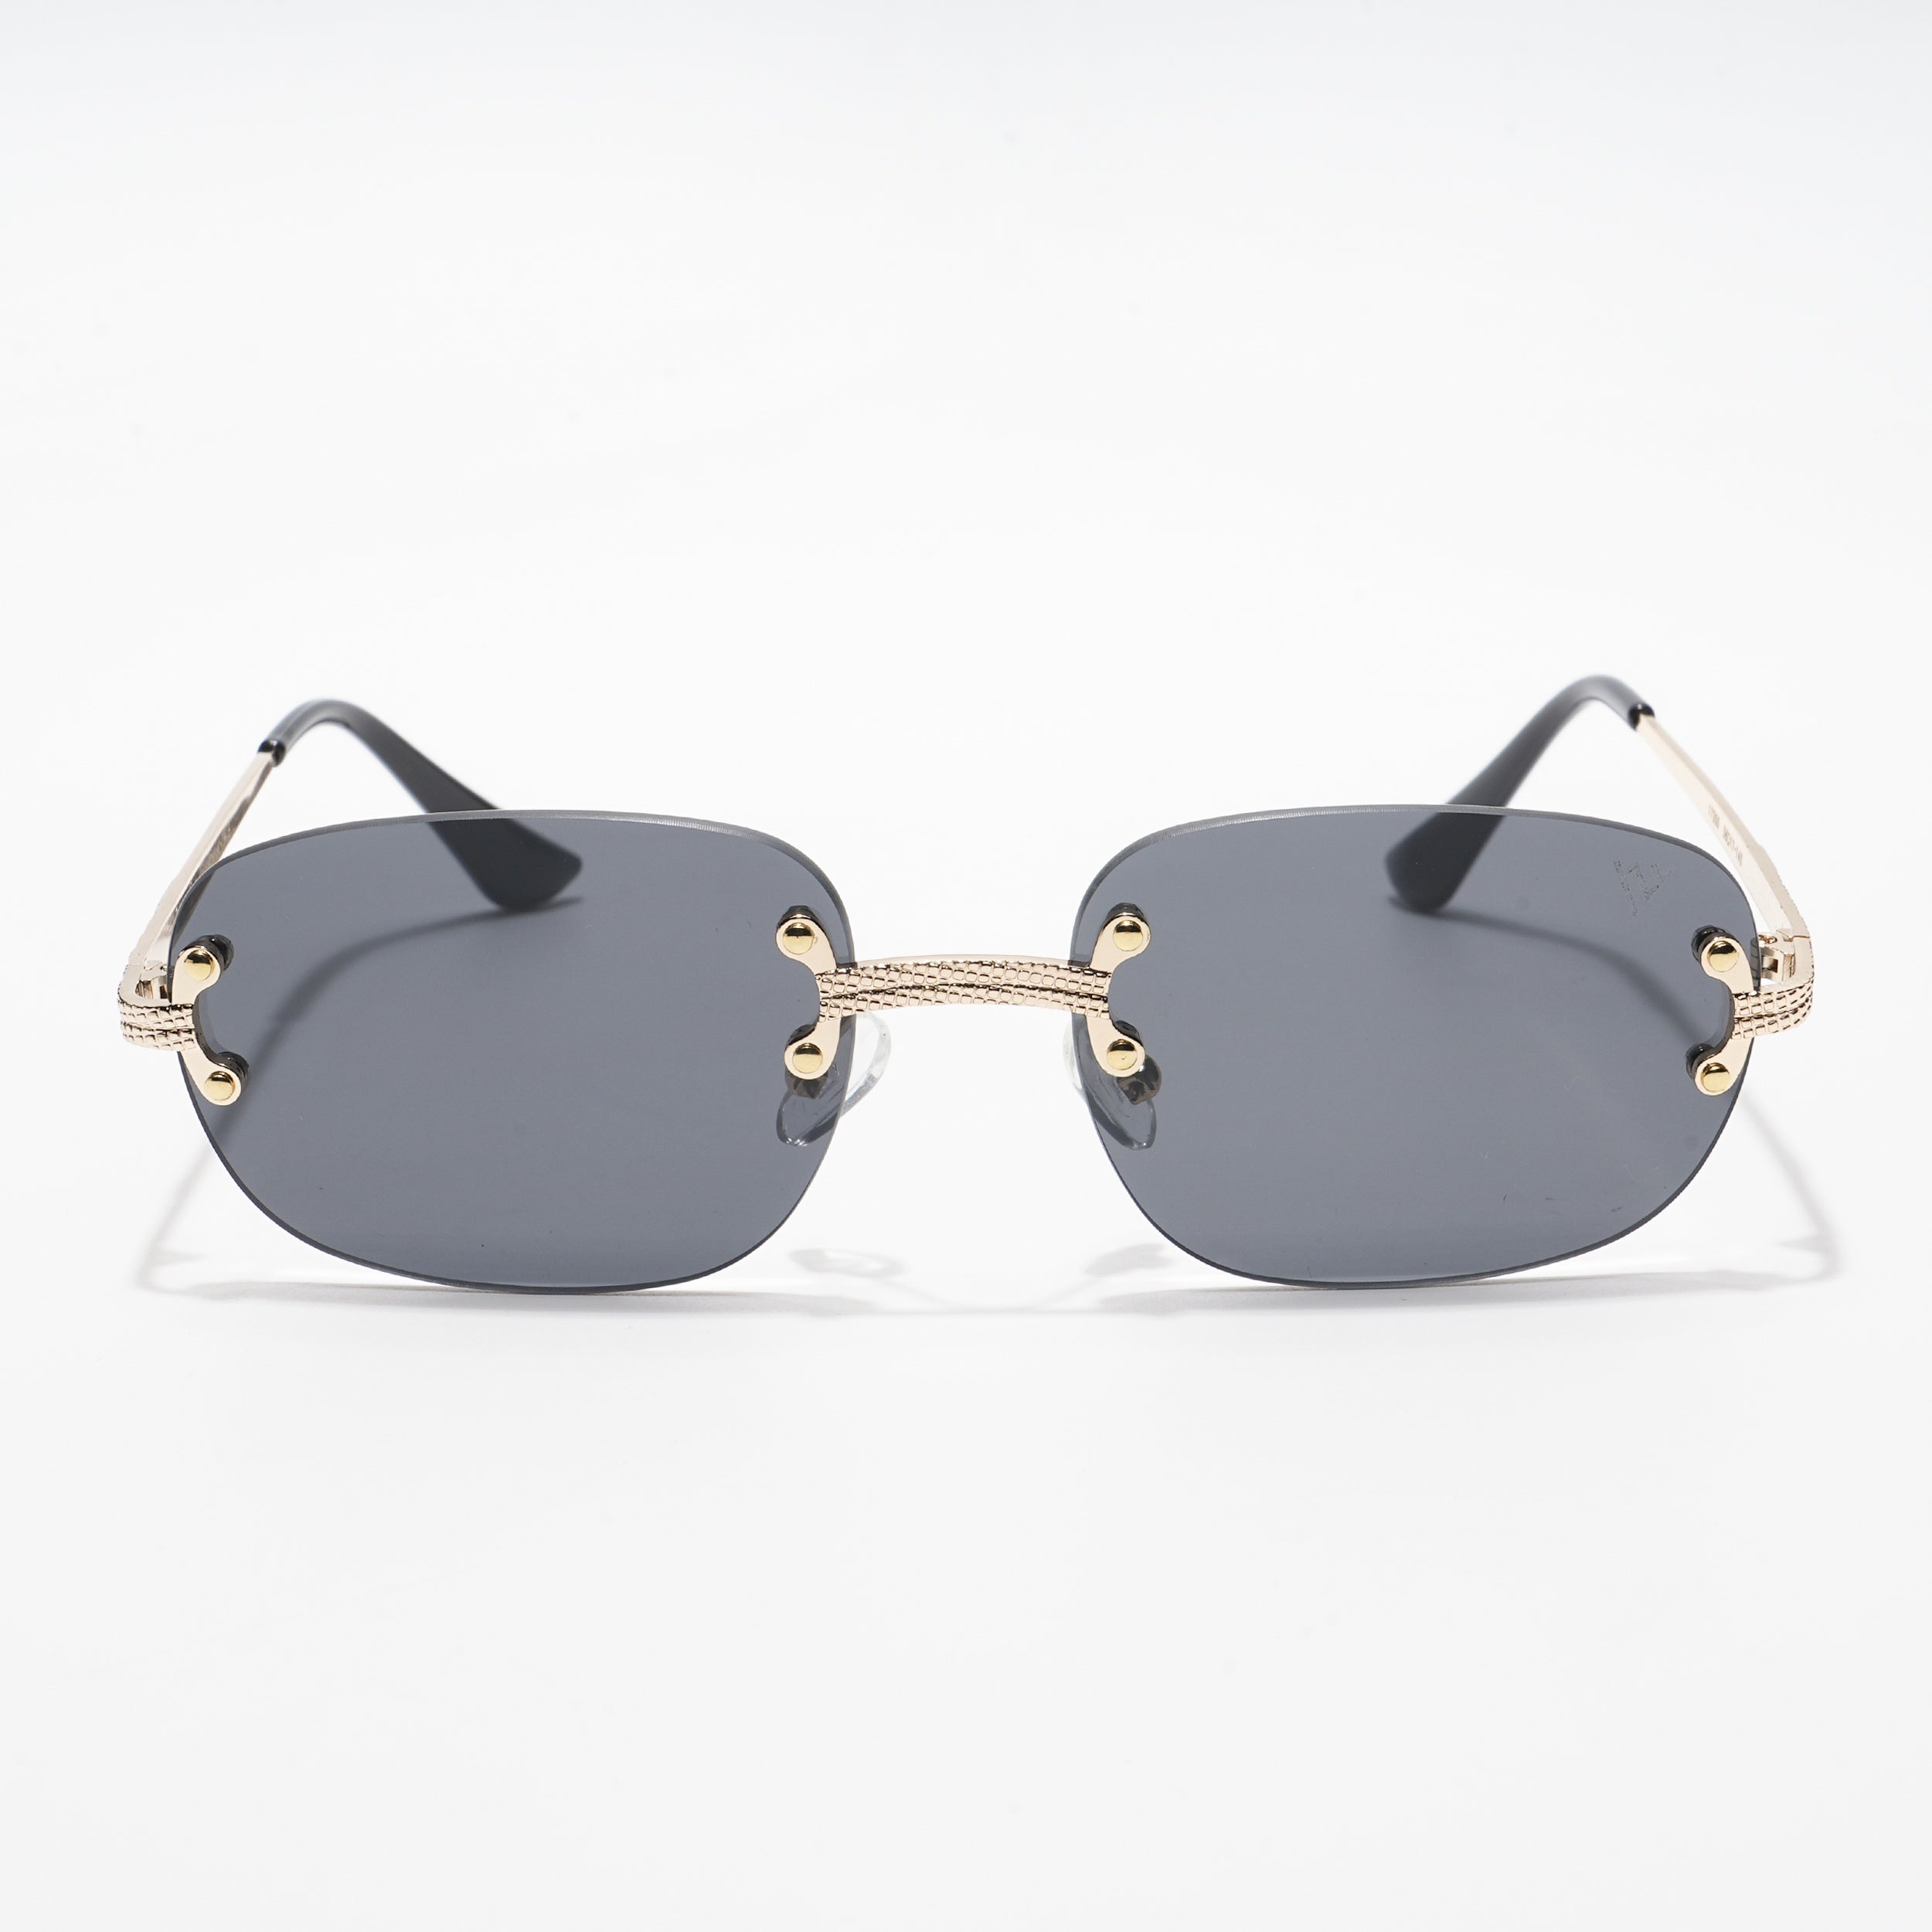 Voyage Black Rimless Sunglasses - MG3610